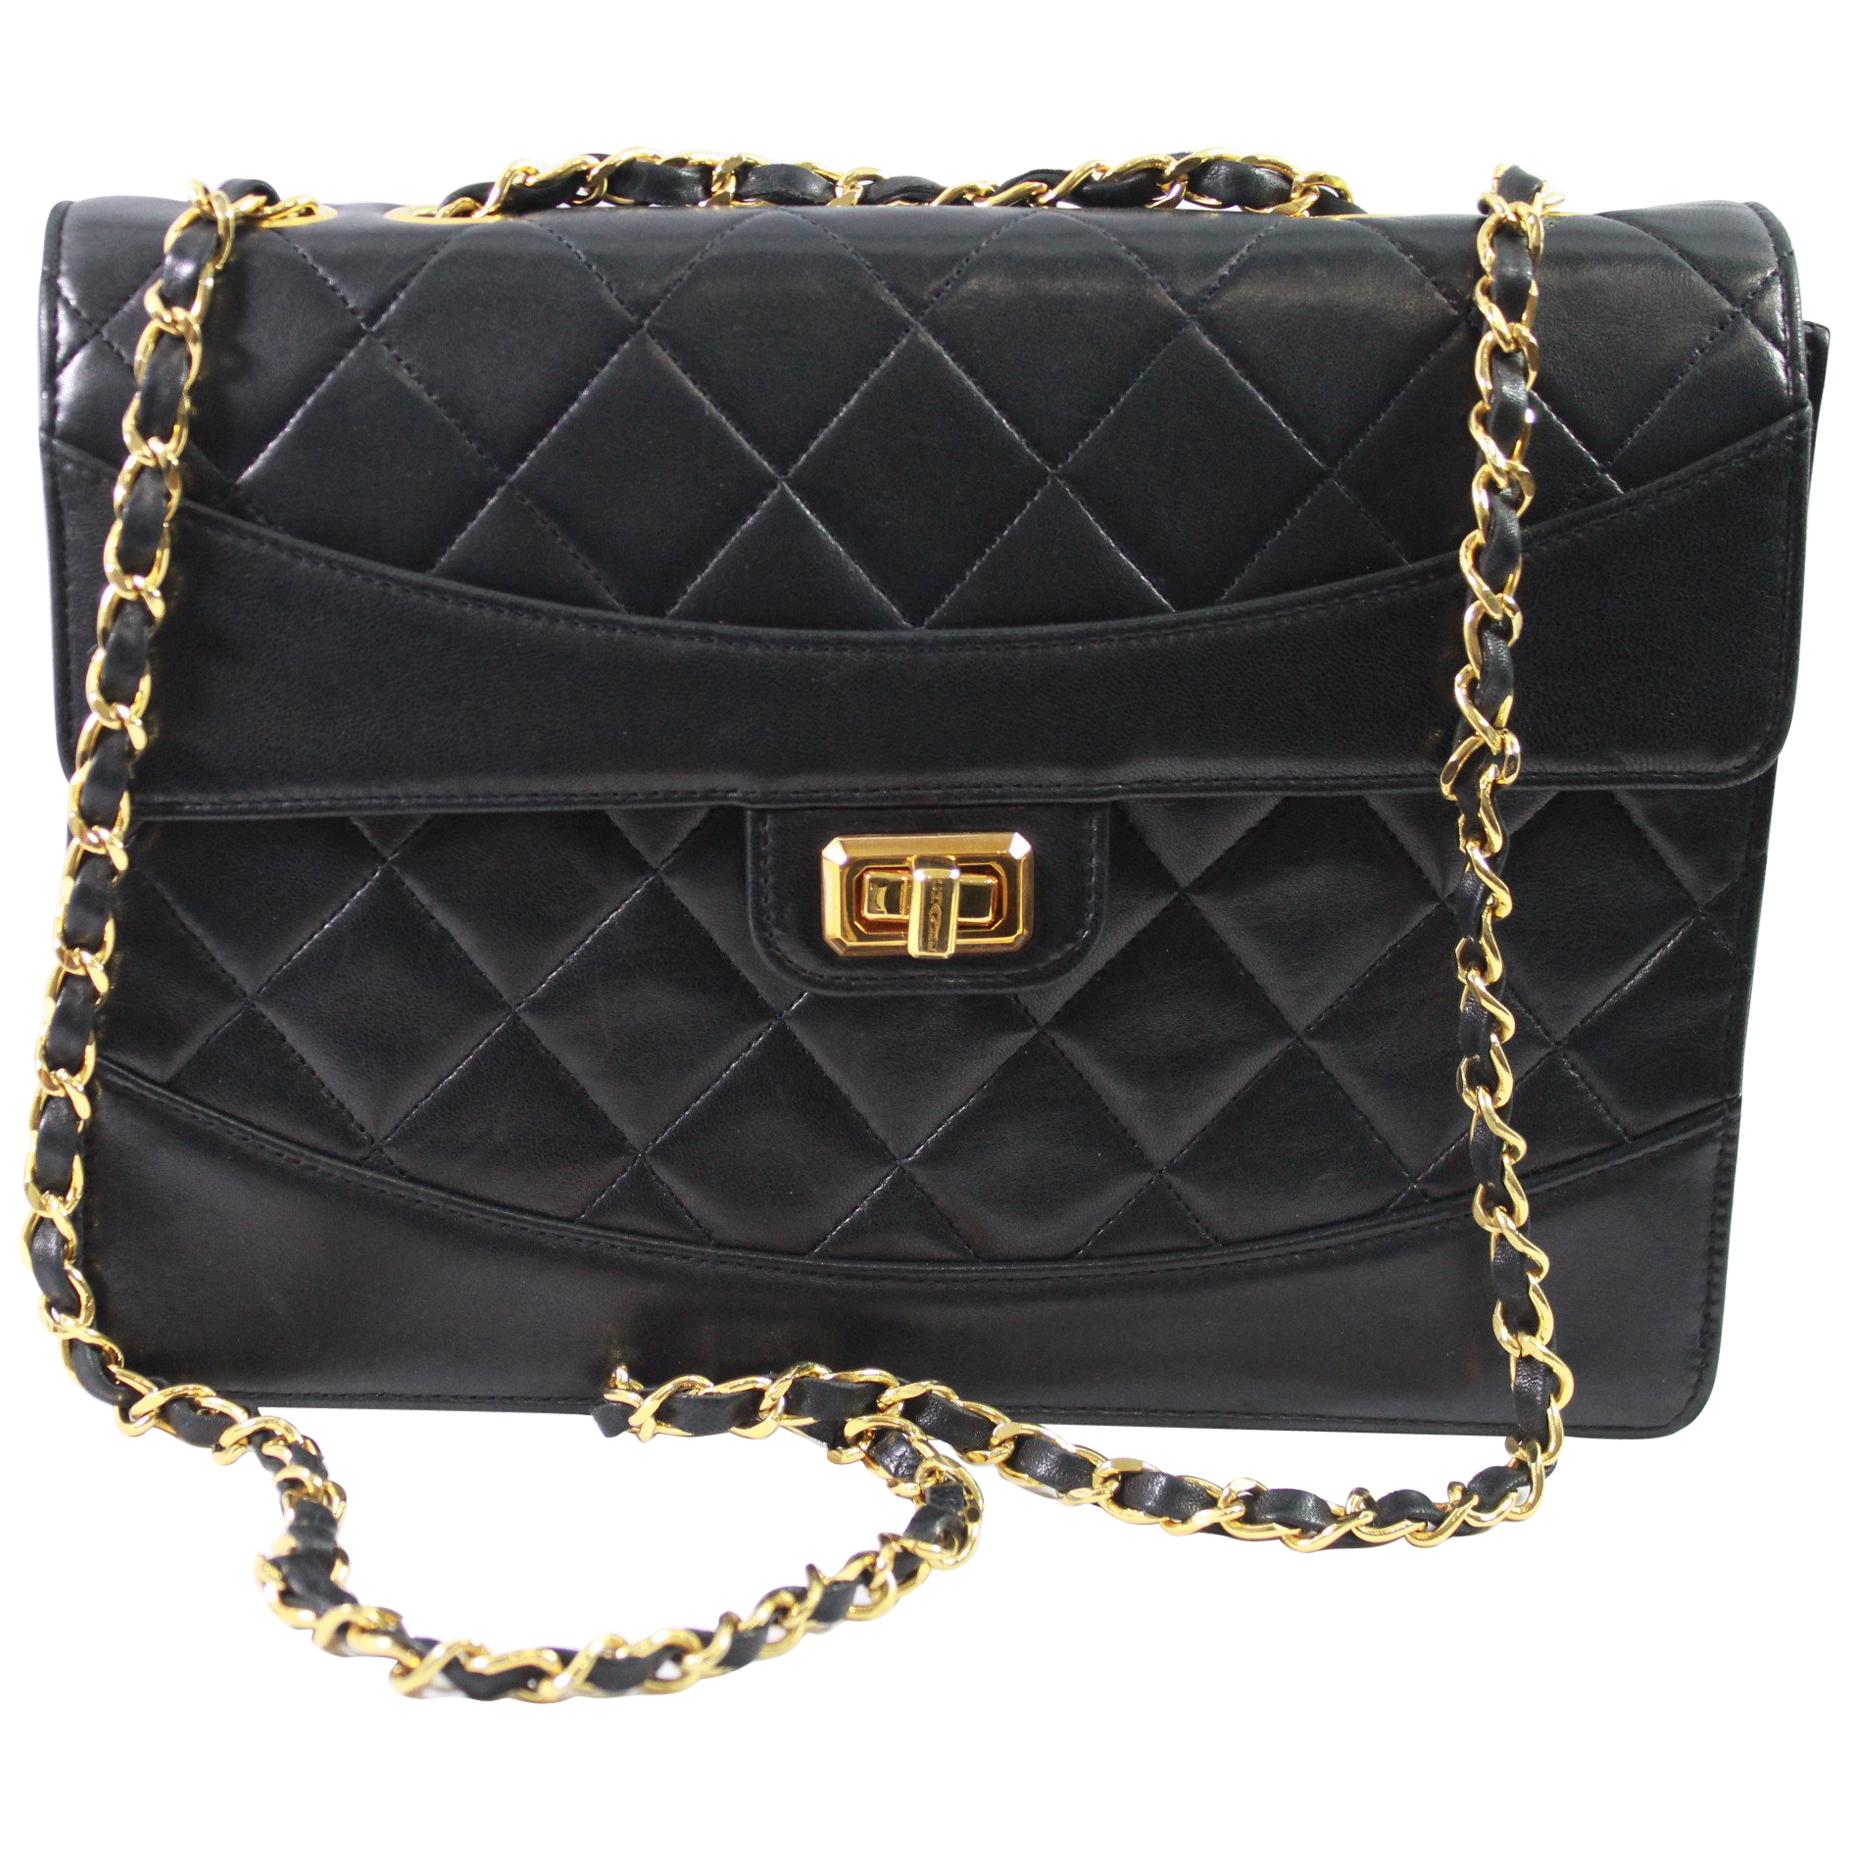 1991 Vintage Chanel Black Lambskin Leather Bag with 2.55 Golden Hardware